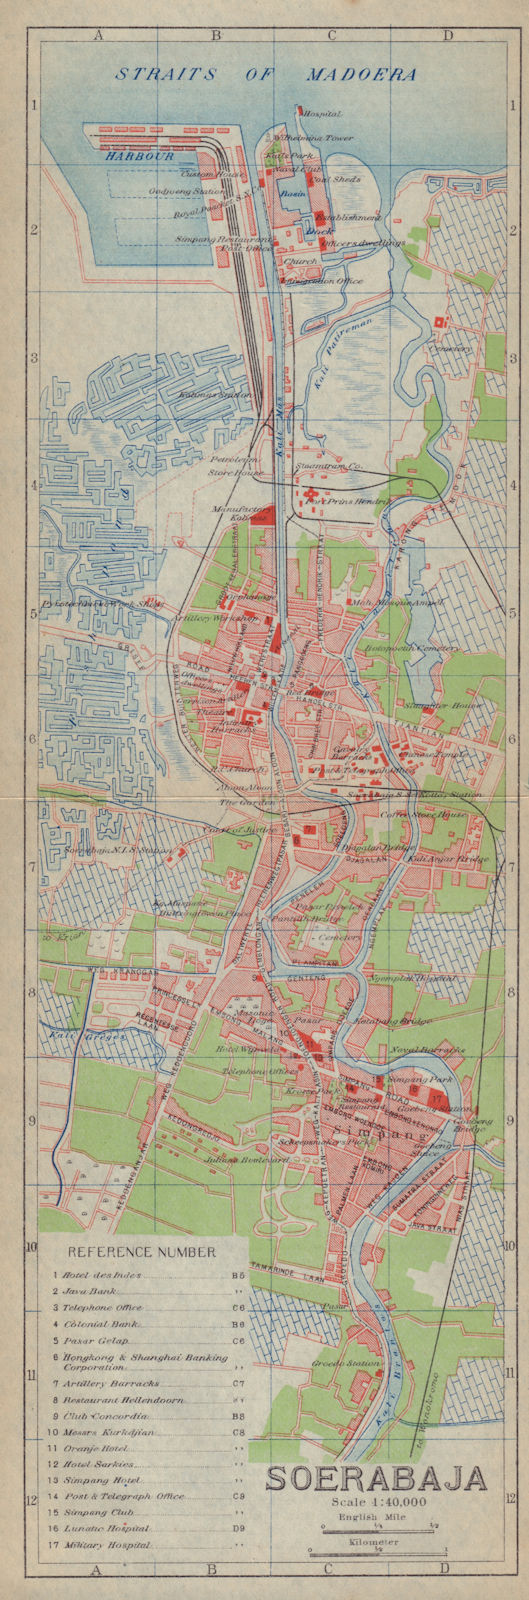 Surabaya antique town city plan. "Soerabaja". East Java, Indonesia 1917 map